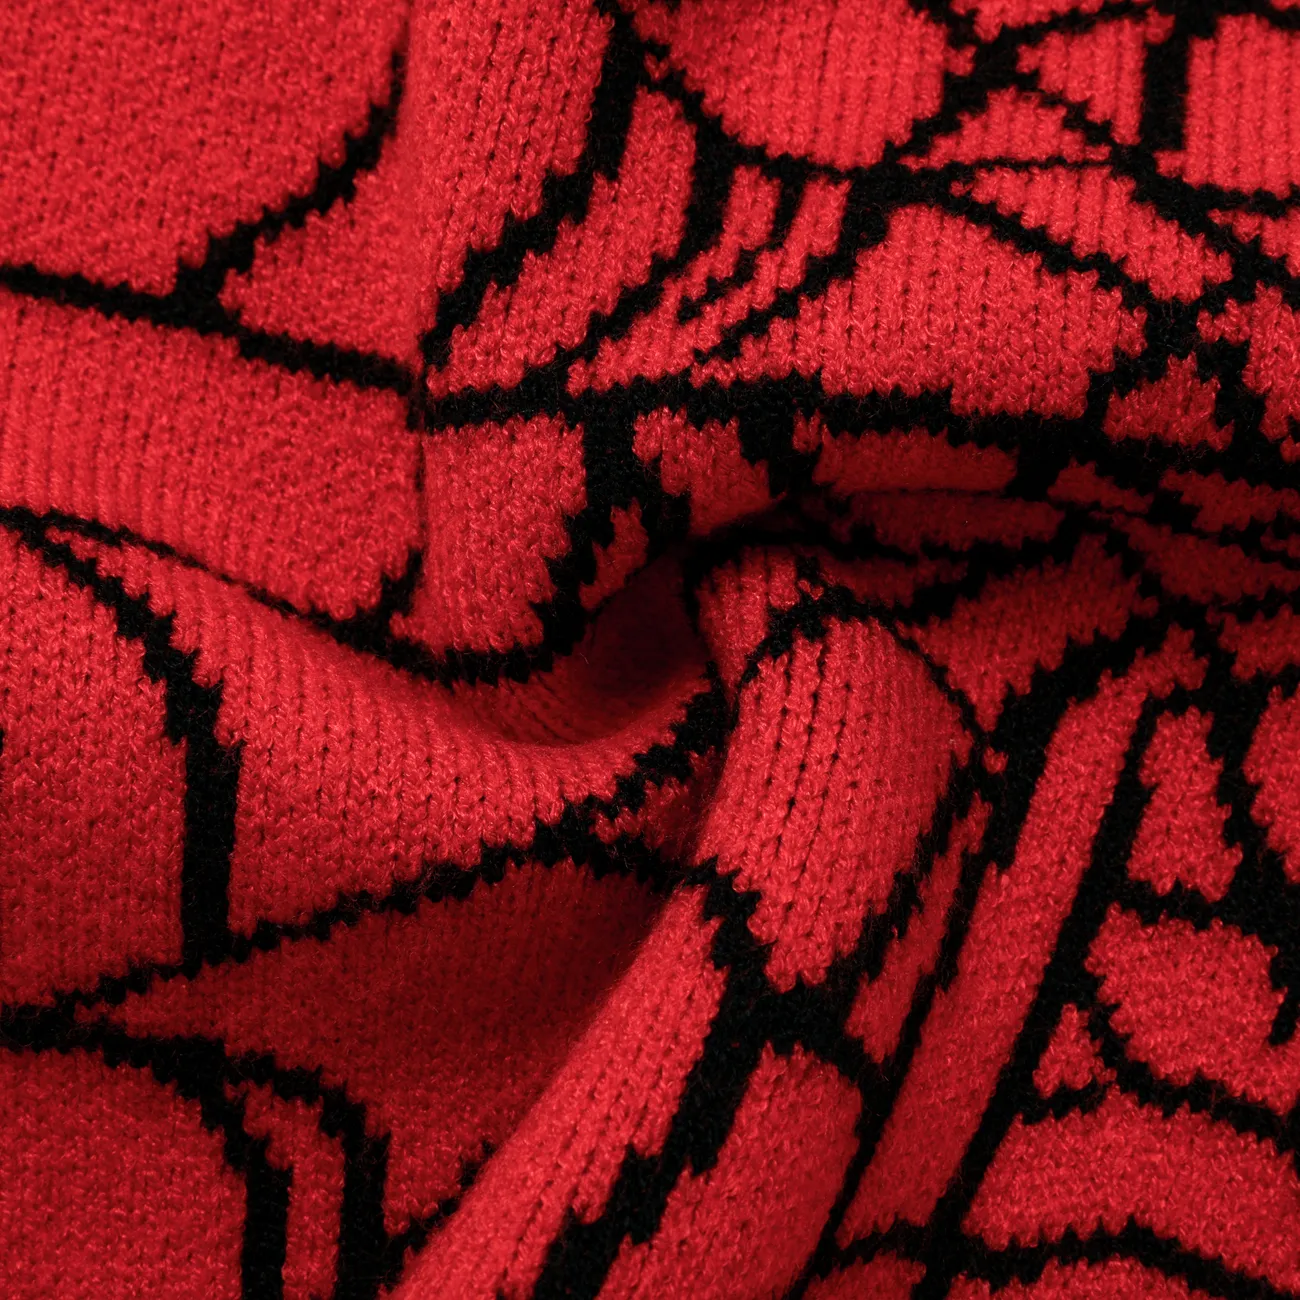 Enfant en bas âge/Kid boy géométrique Spider Web Design motif pull surdimensionné Rouge big image 1